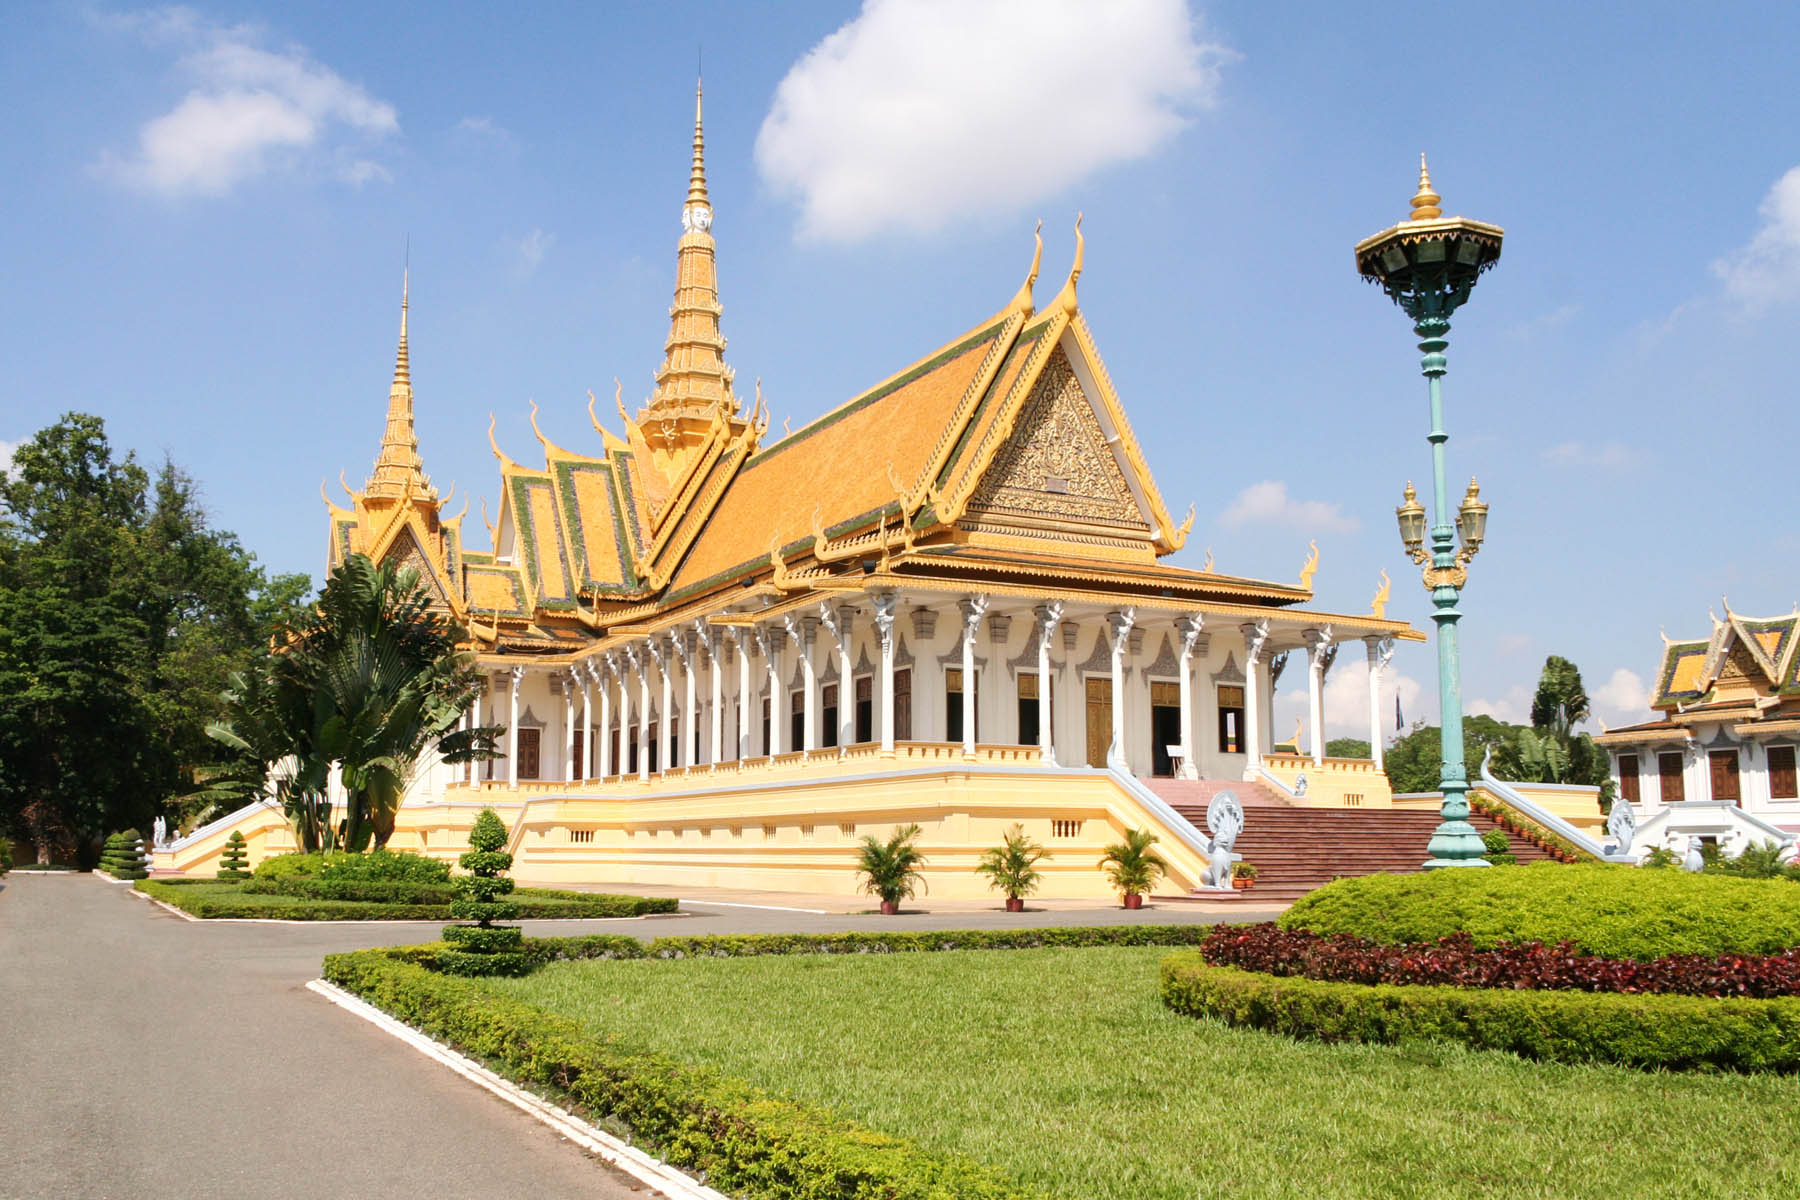 King Sihamoni's Birthday Queen Mother's Birthday Norodom Sihamoni’s Coronation Day Royal Palace Phnom Penh